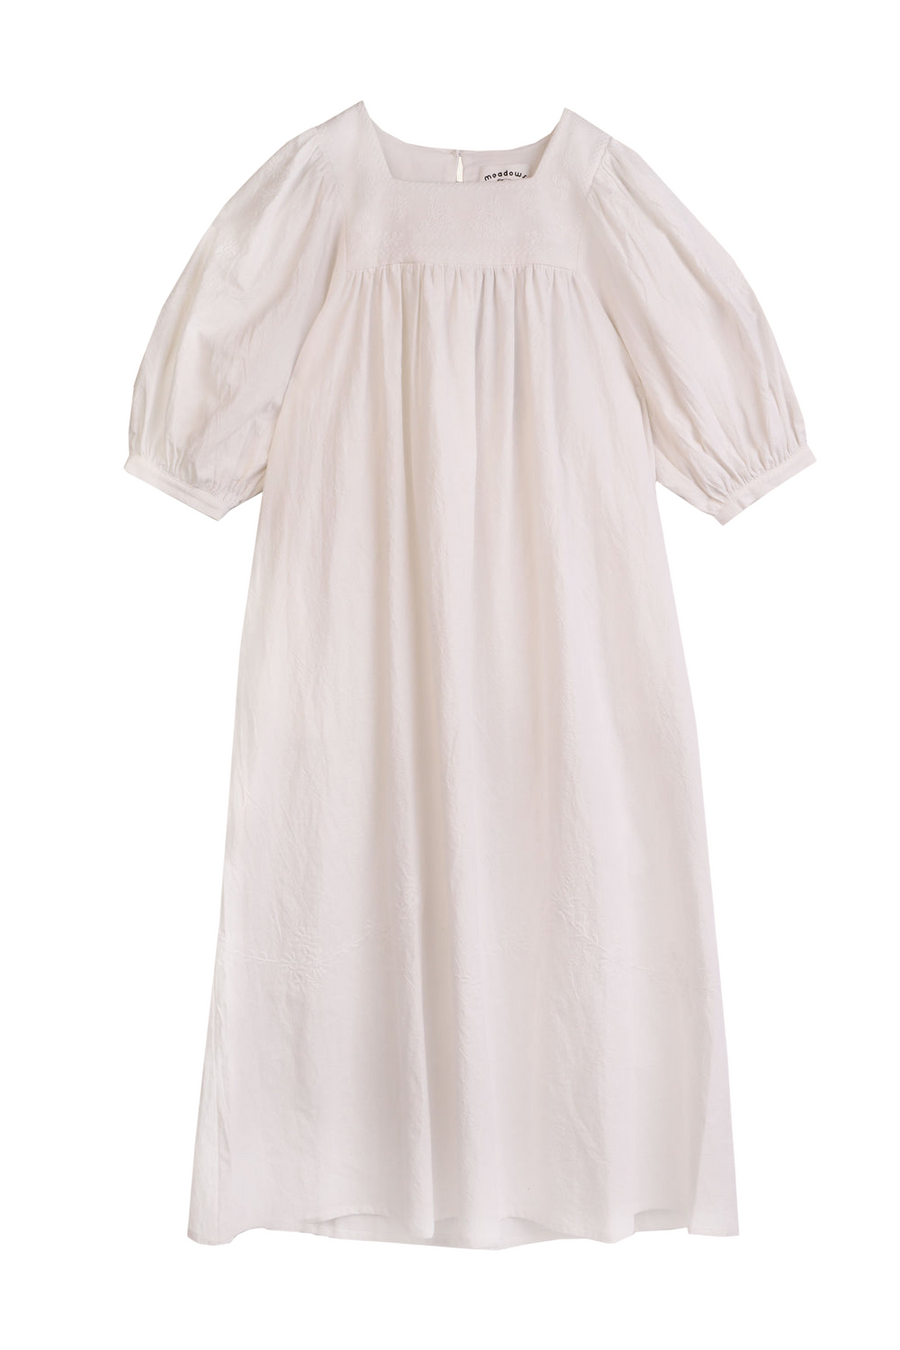 Crocus Dress White